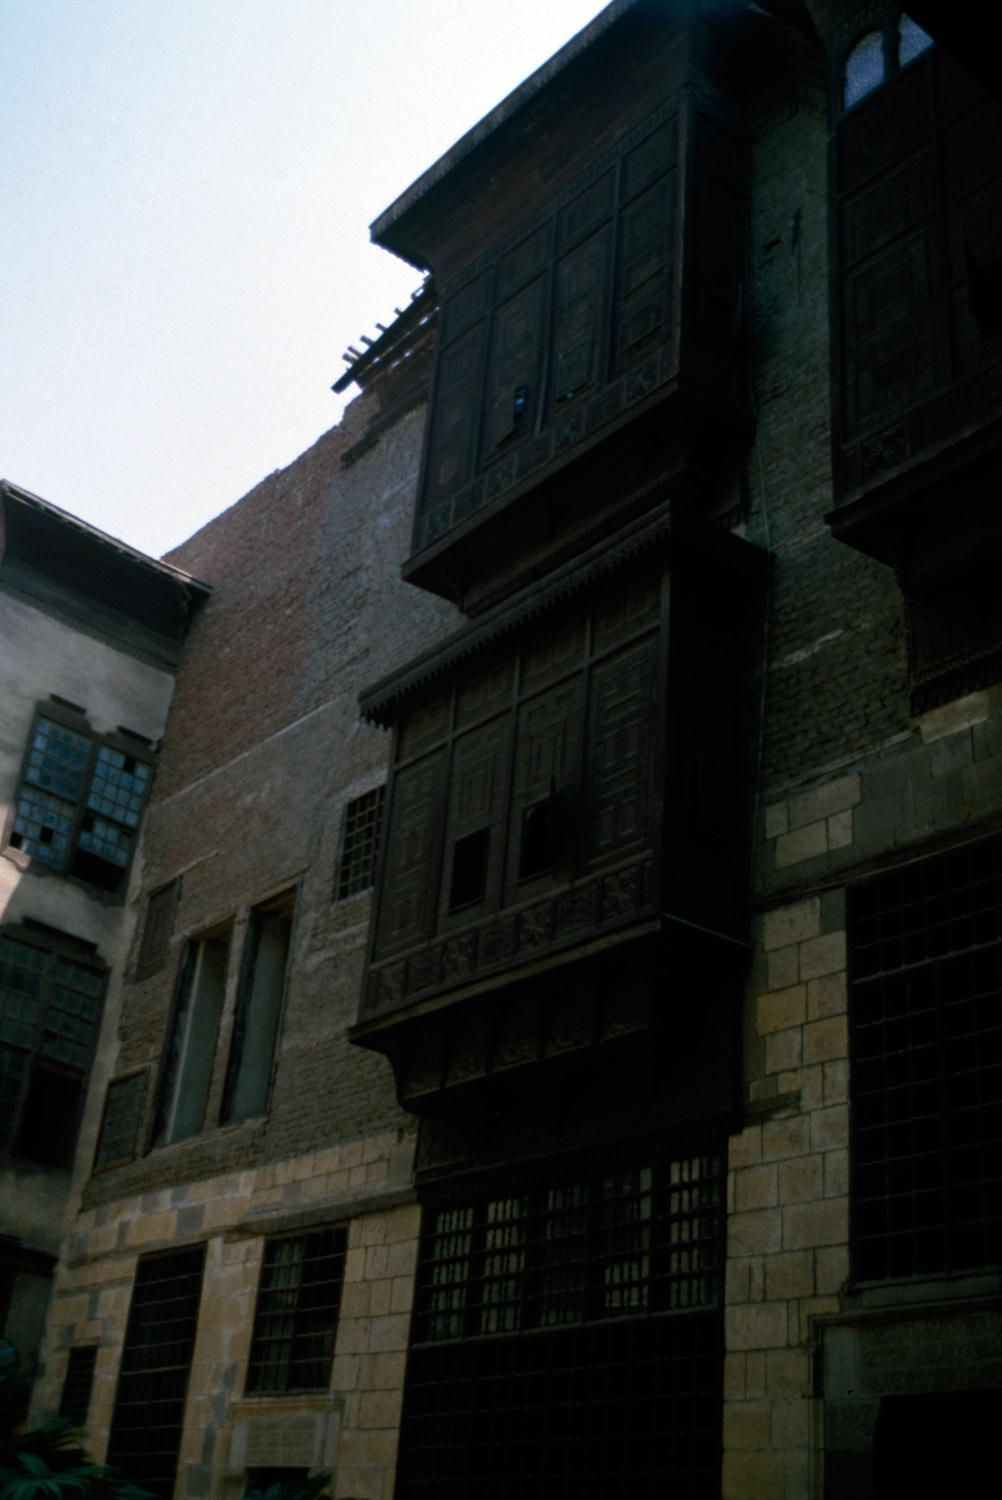 Mashrabiyyas on the southeast courtyard façade